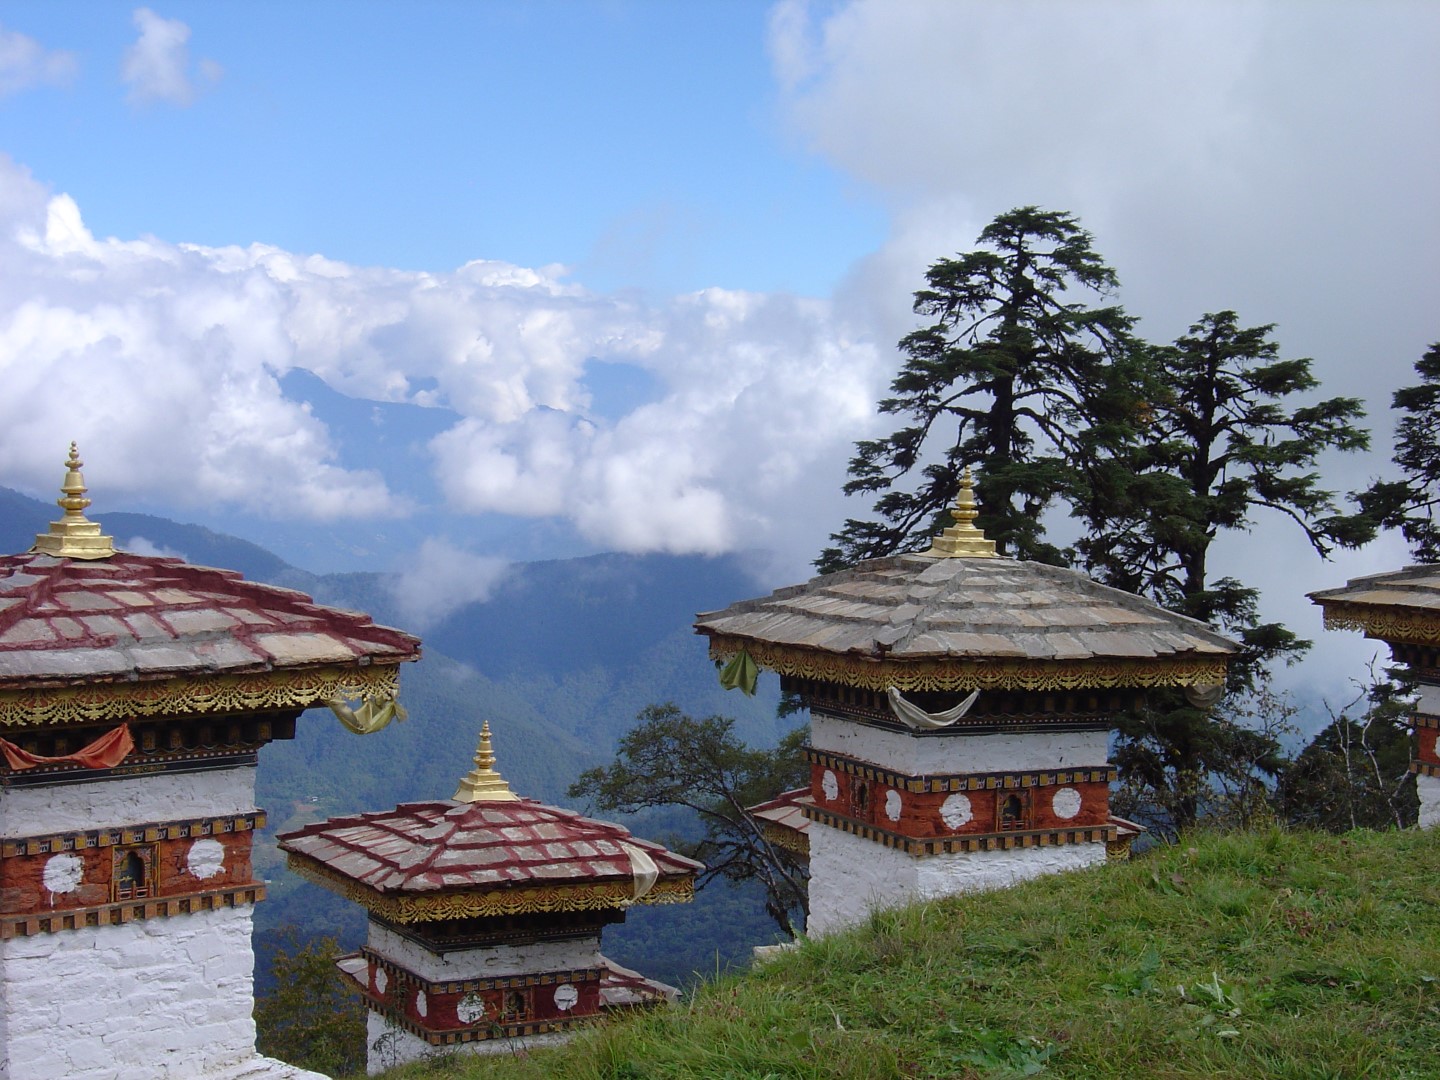 wp-content/uploads/itineraries/Bhutan/bhutan (2).jpg